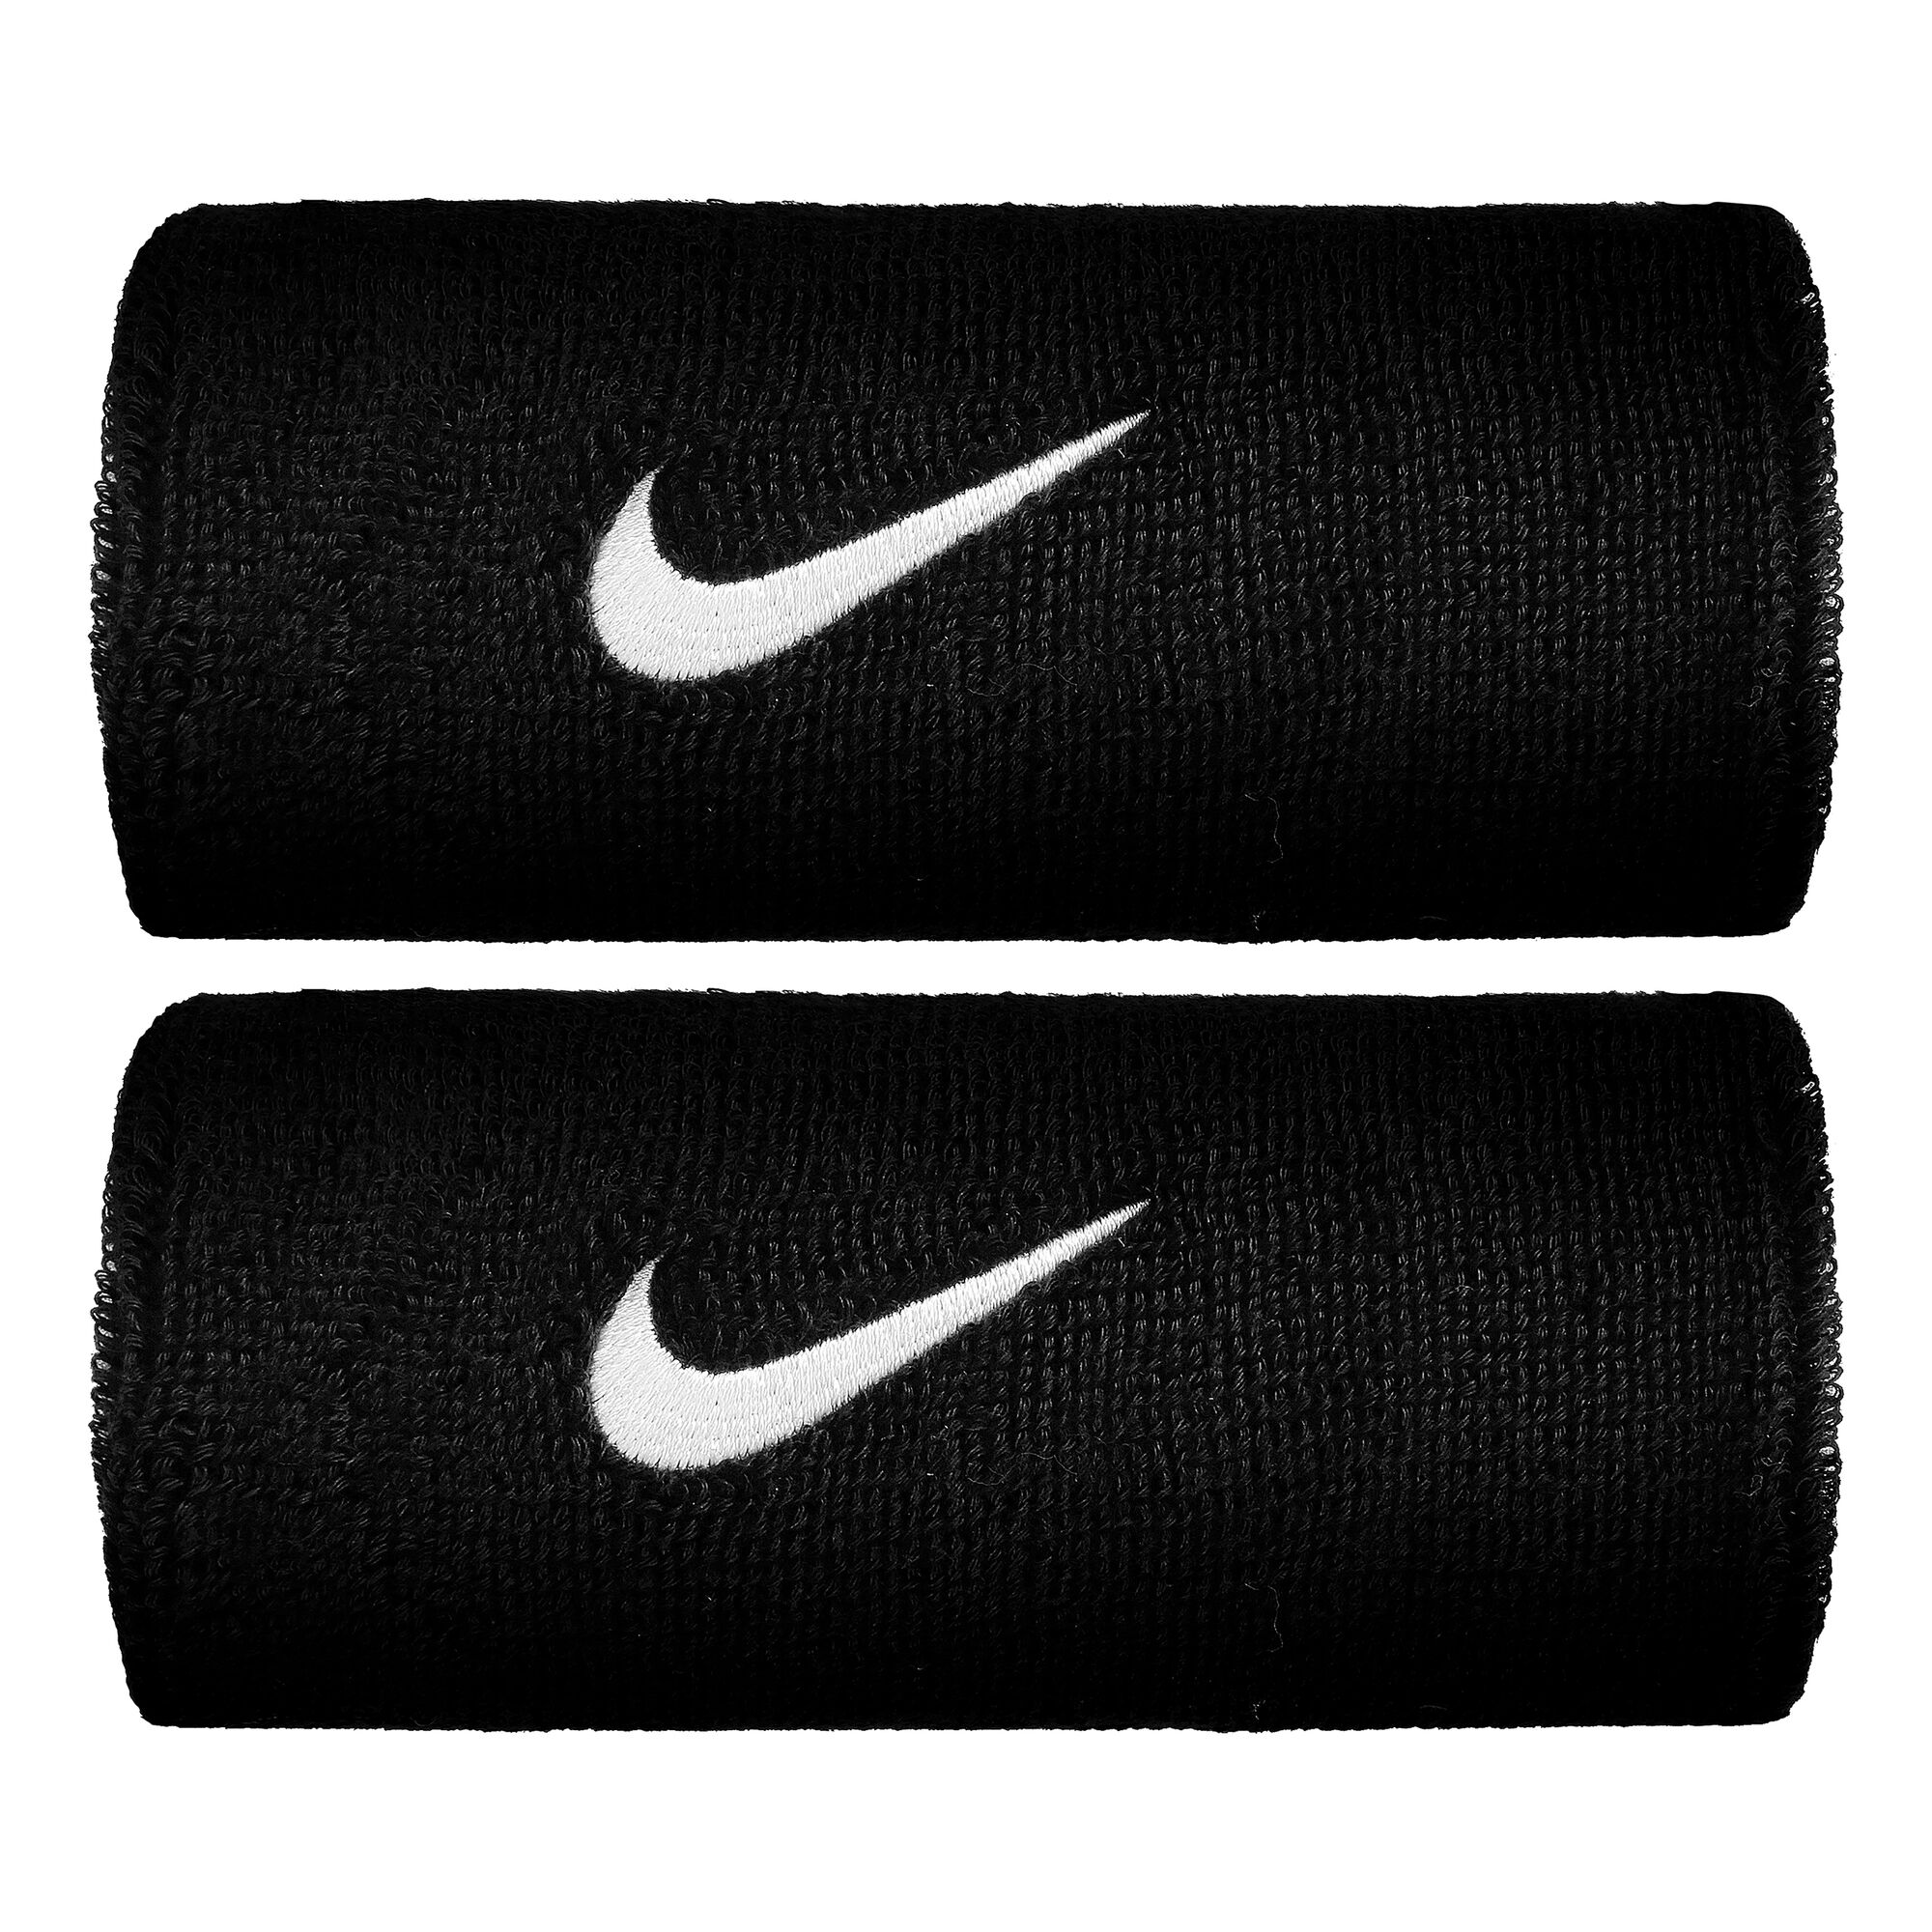 buy Nike Swoosh Doublewide Wristband 2 Pack - Black, White online ...